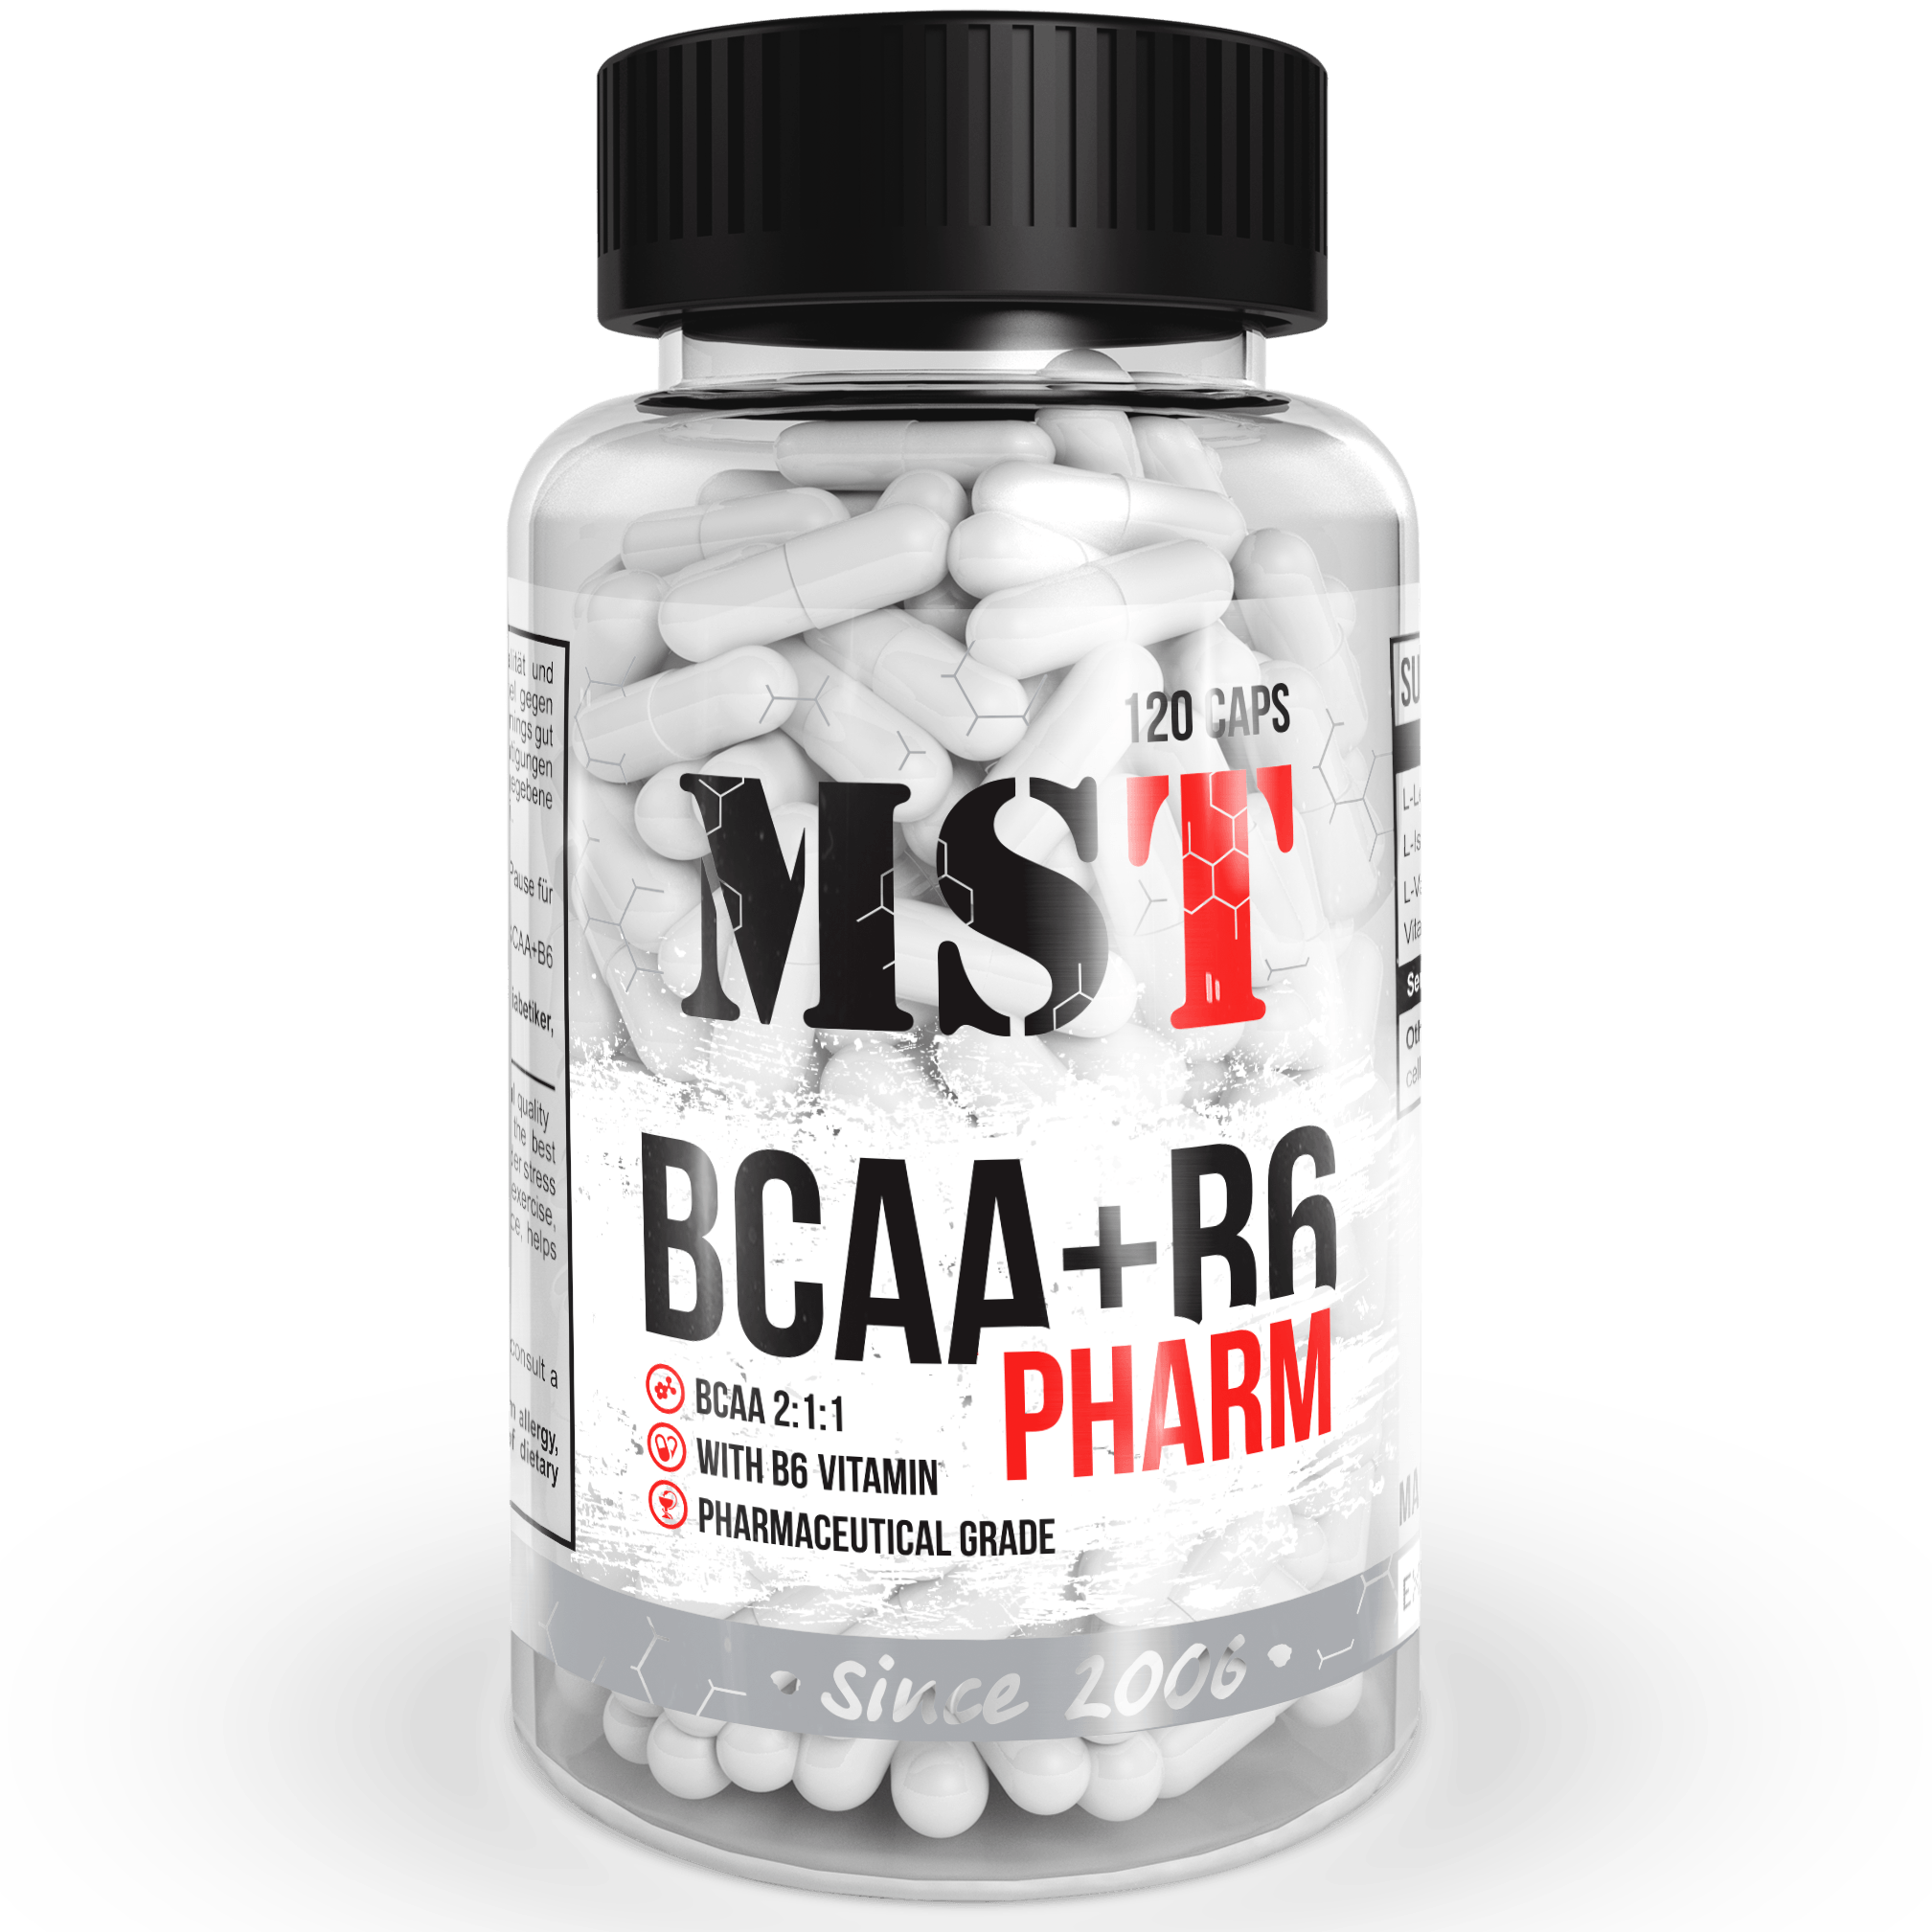 BCAA+B6 Pharm, 120 piezas, MST Nutrition. BCAA. Weight Loss recuperación Anti-catabolic properties Lean muscle mass 